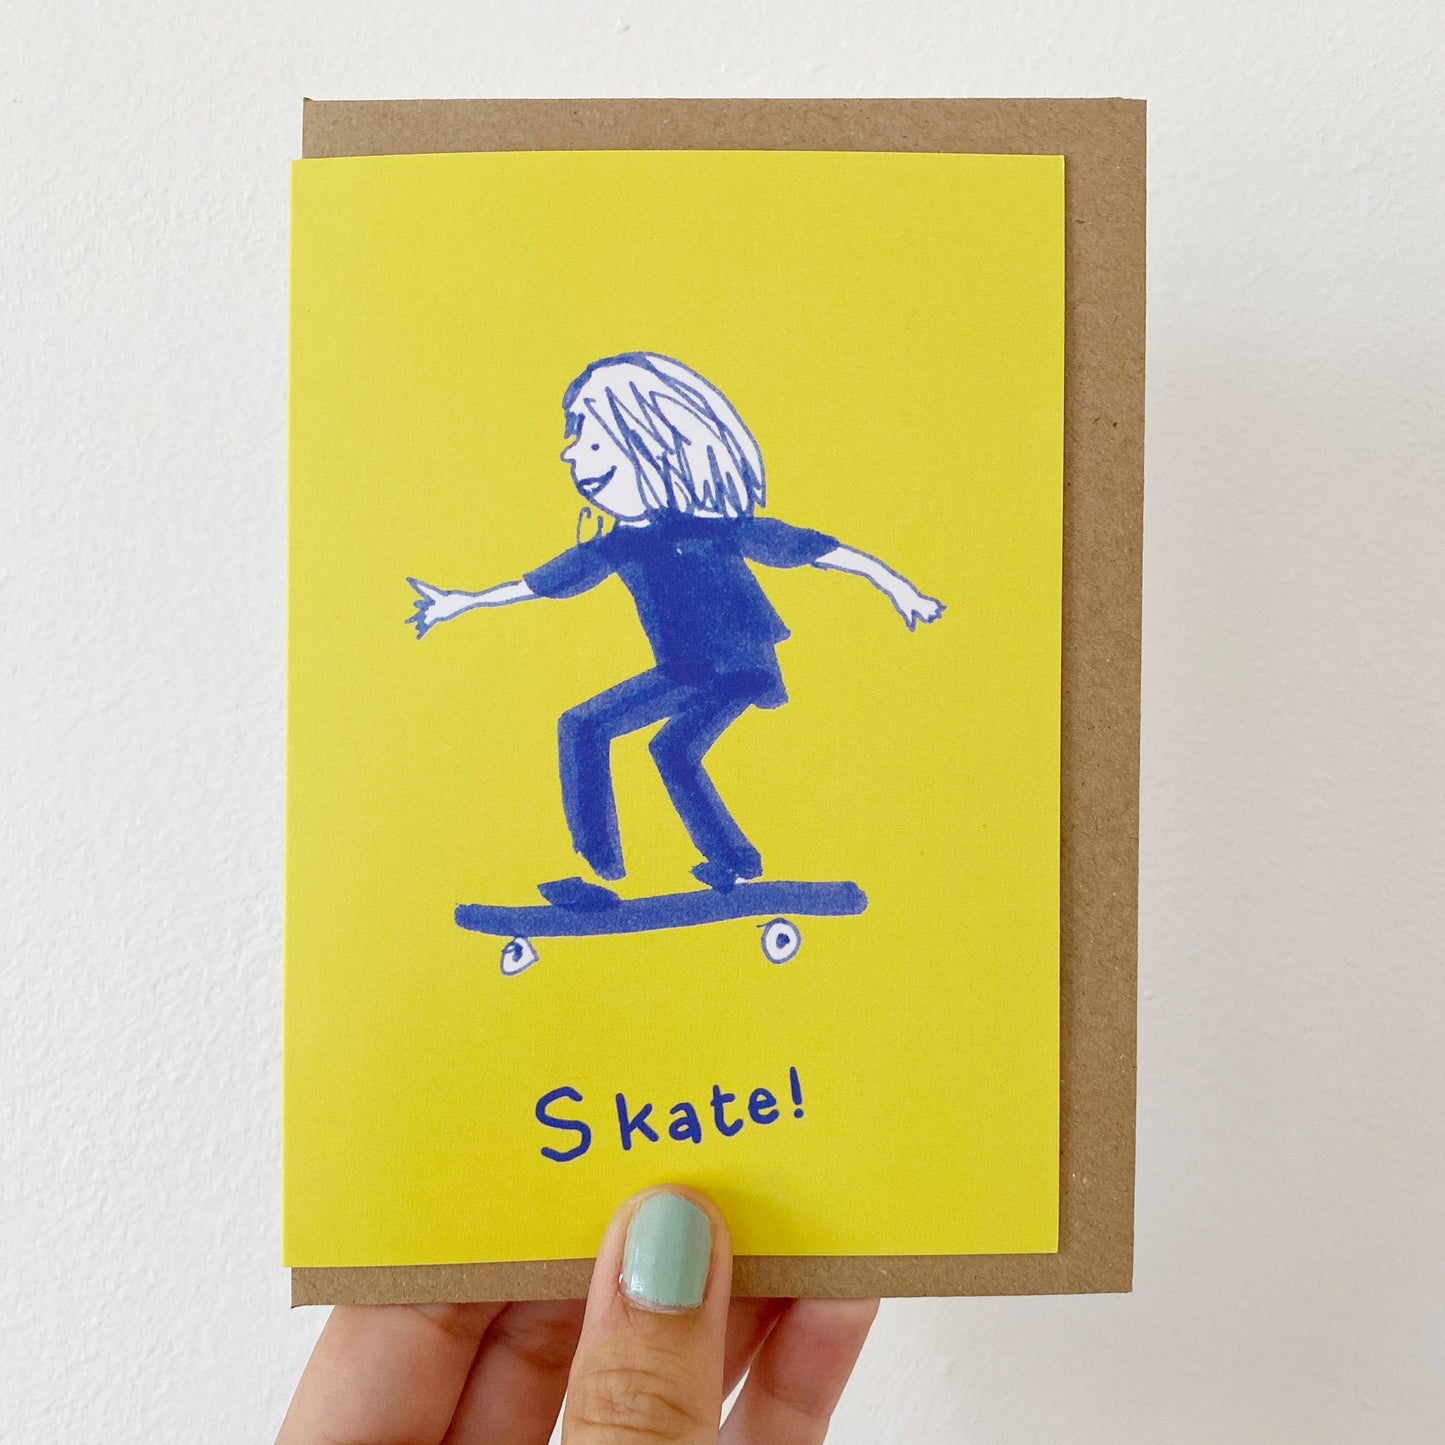 Skateboard greetings card